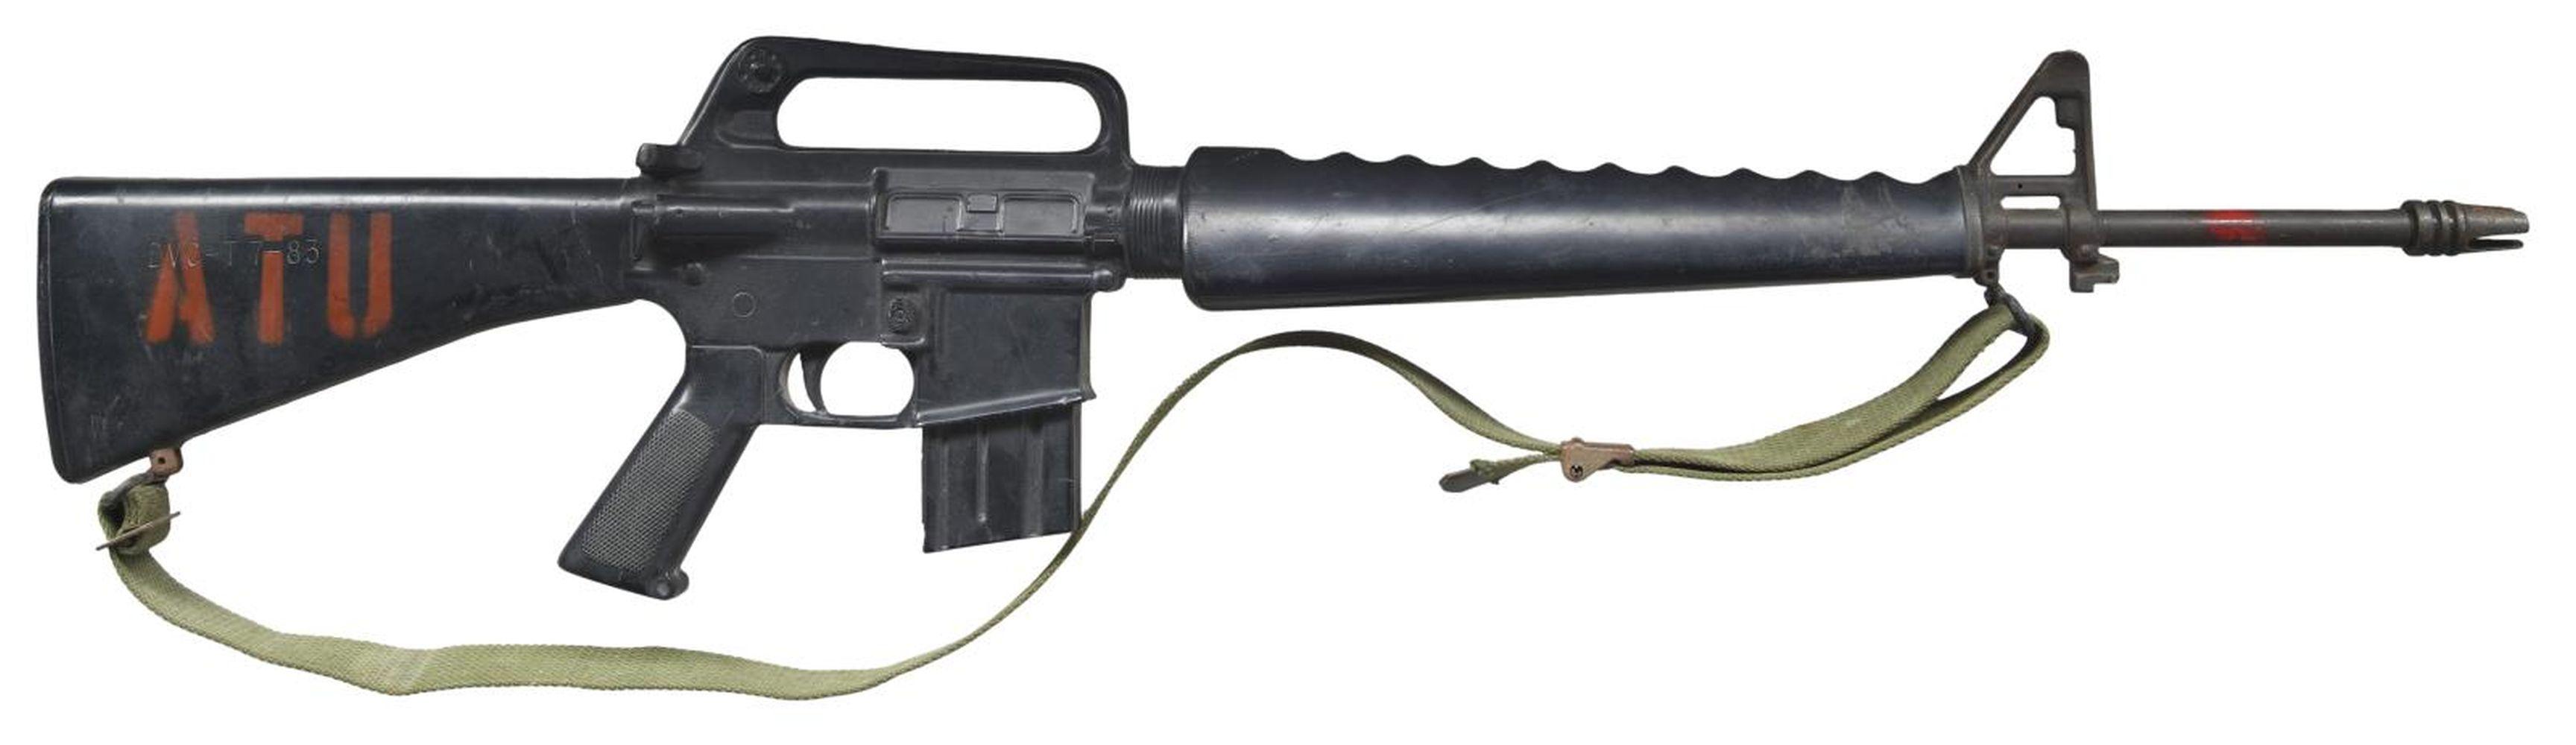 "RUBBER DUCK" COLT M16A1 TRAINING RIFLE.